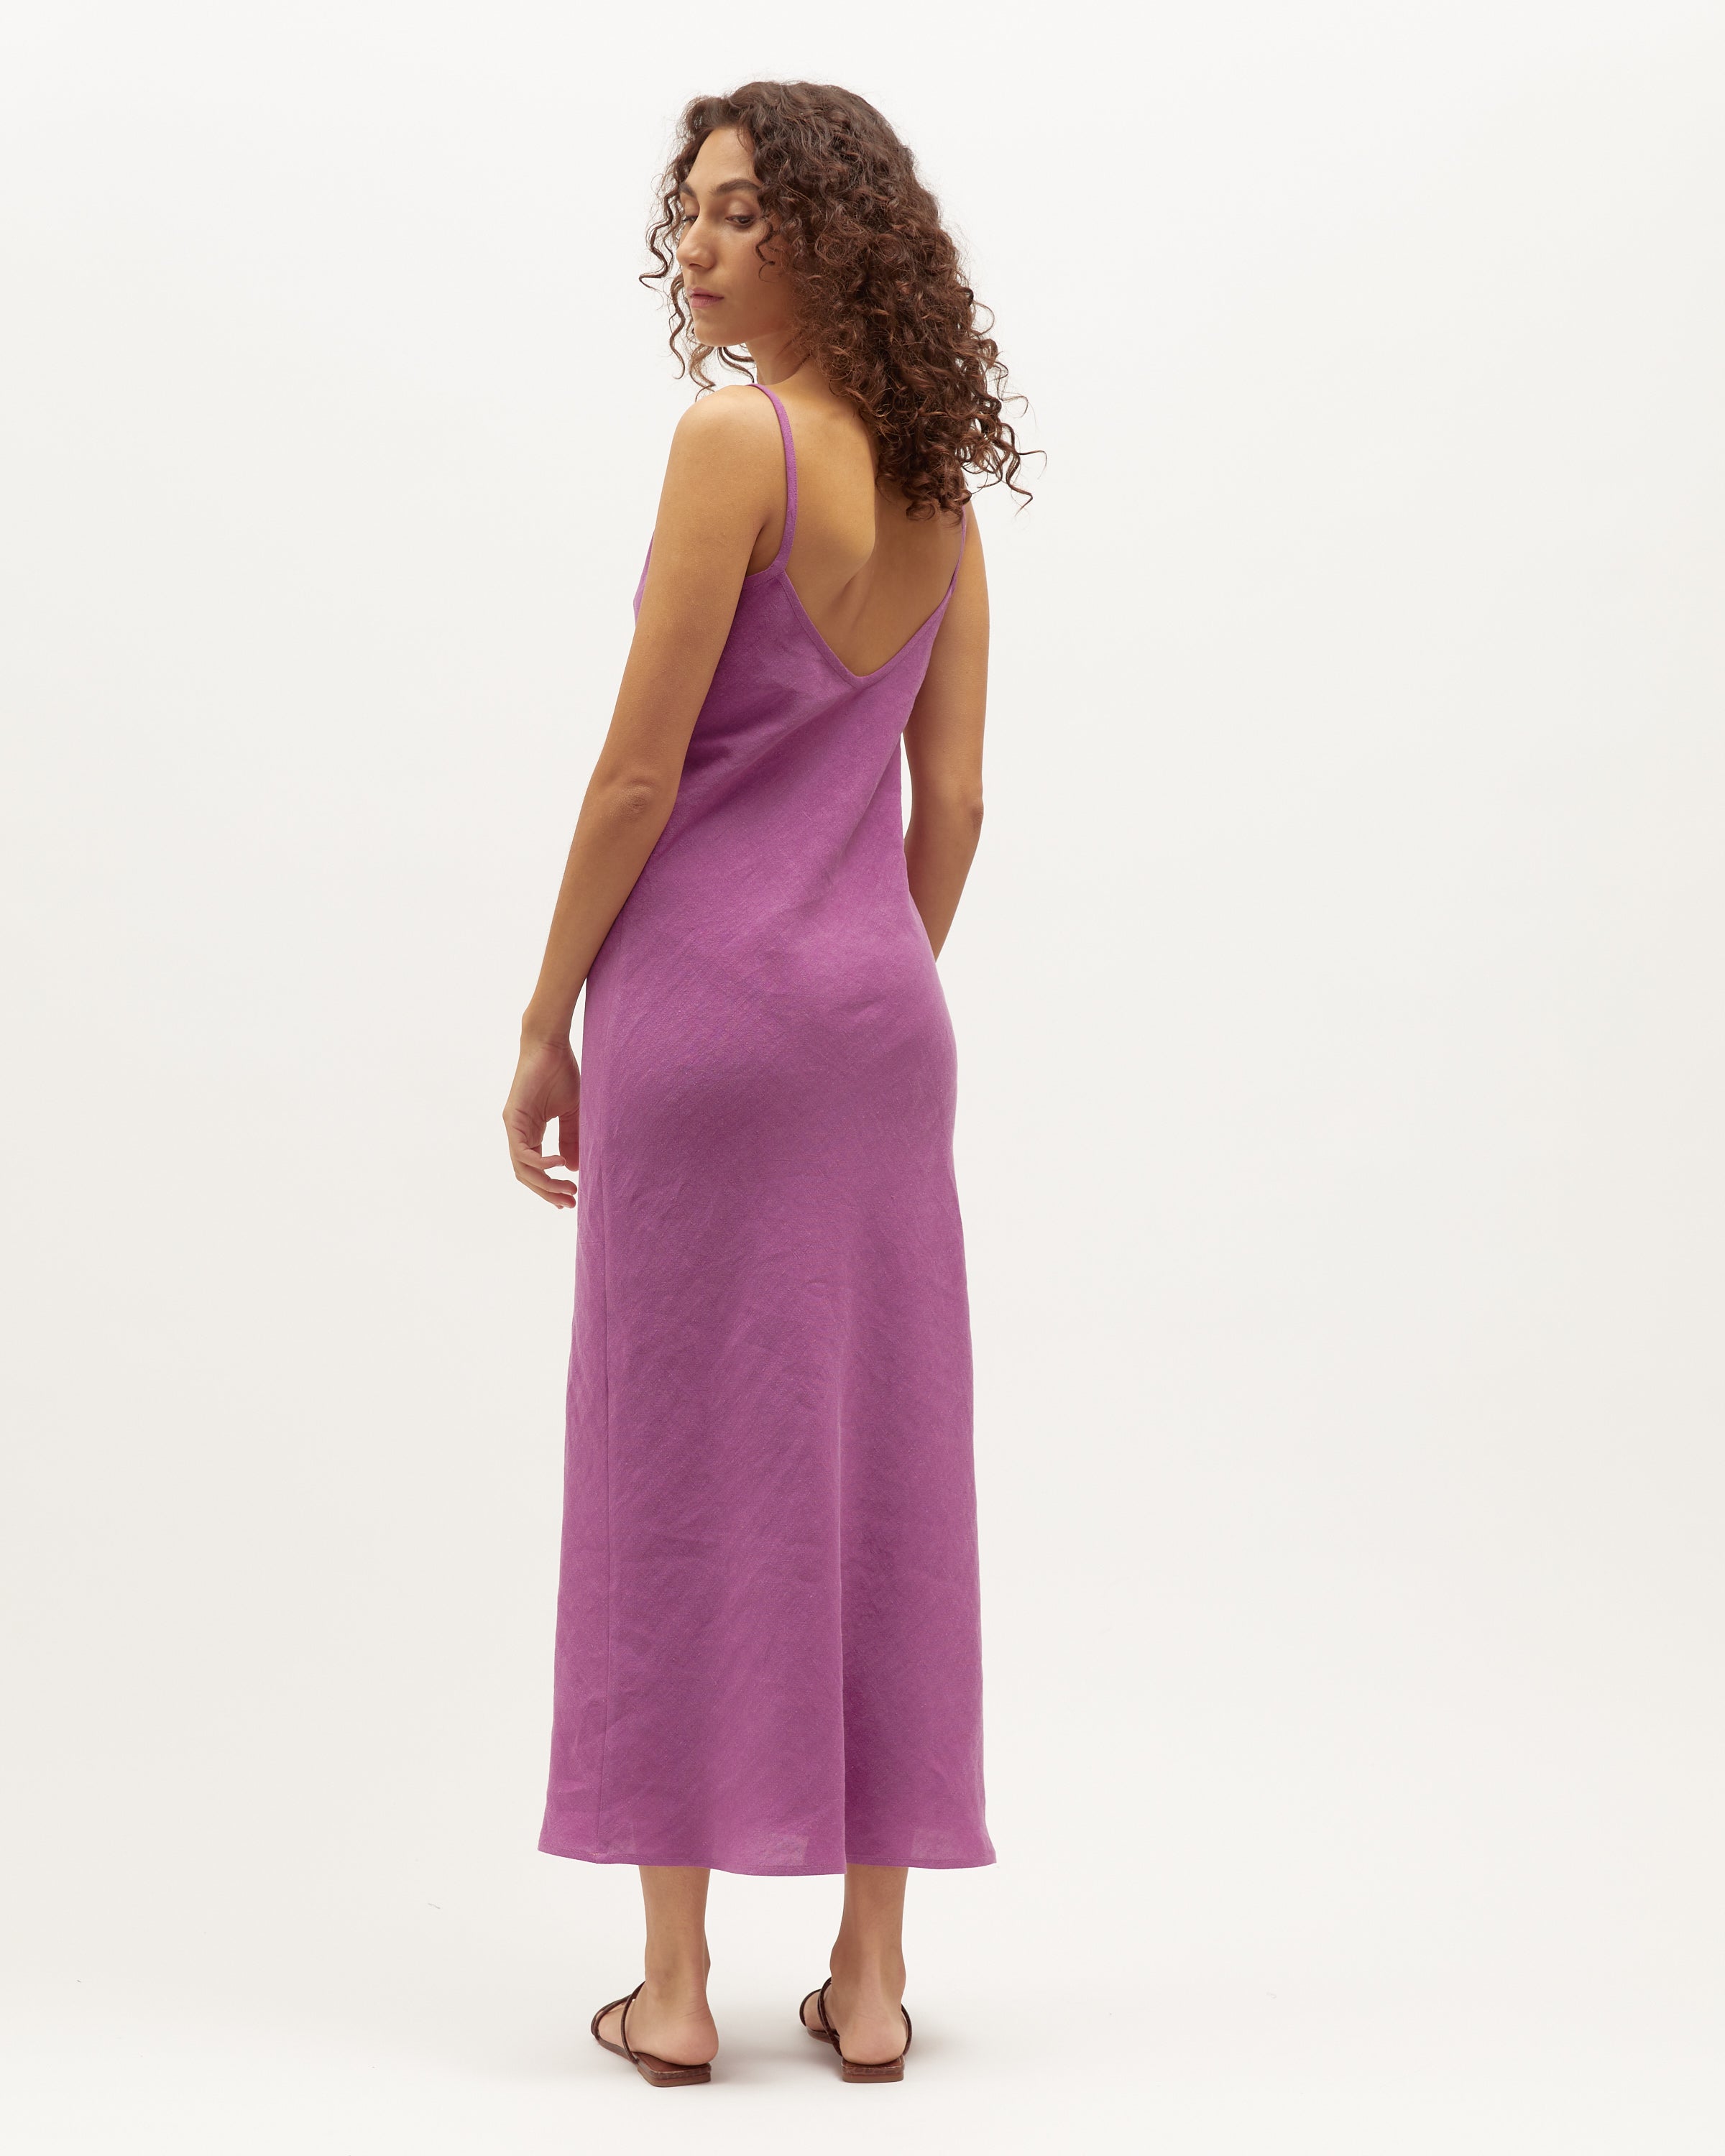 Midi Bias Dress | Berry Washed Linen $289